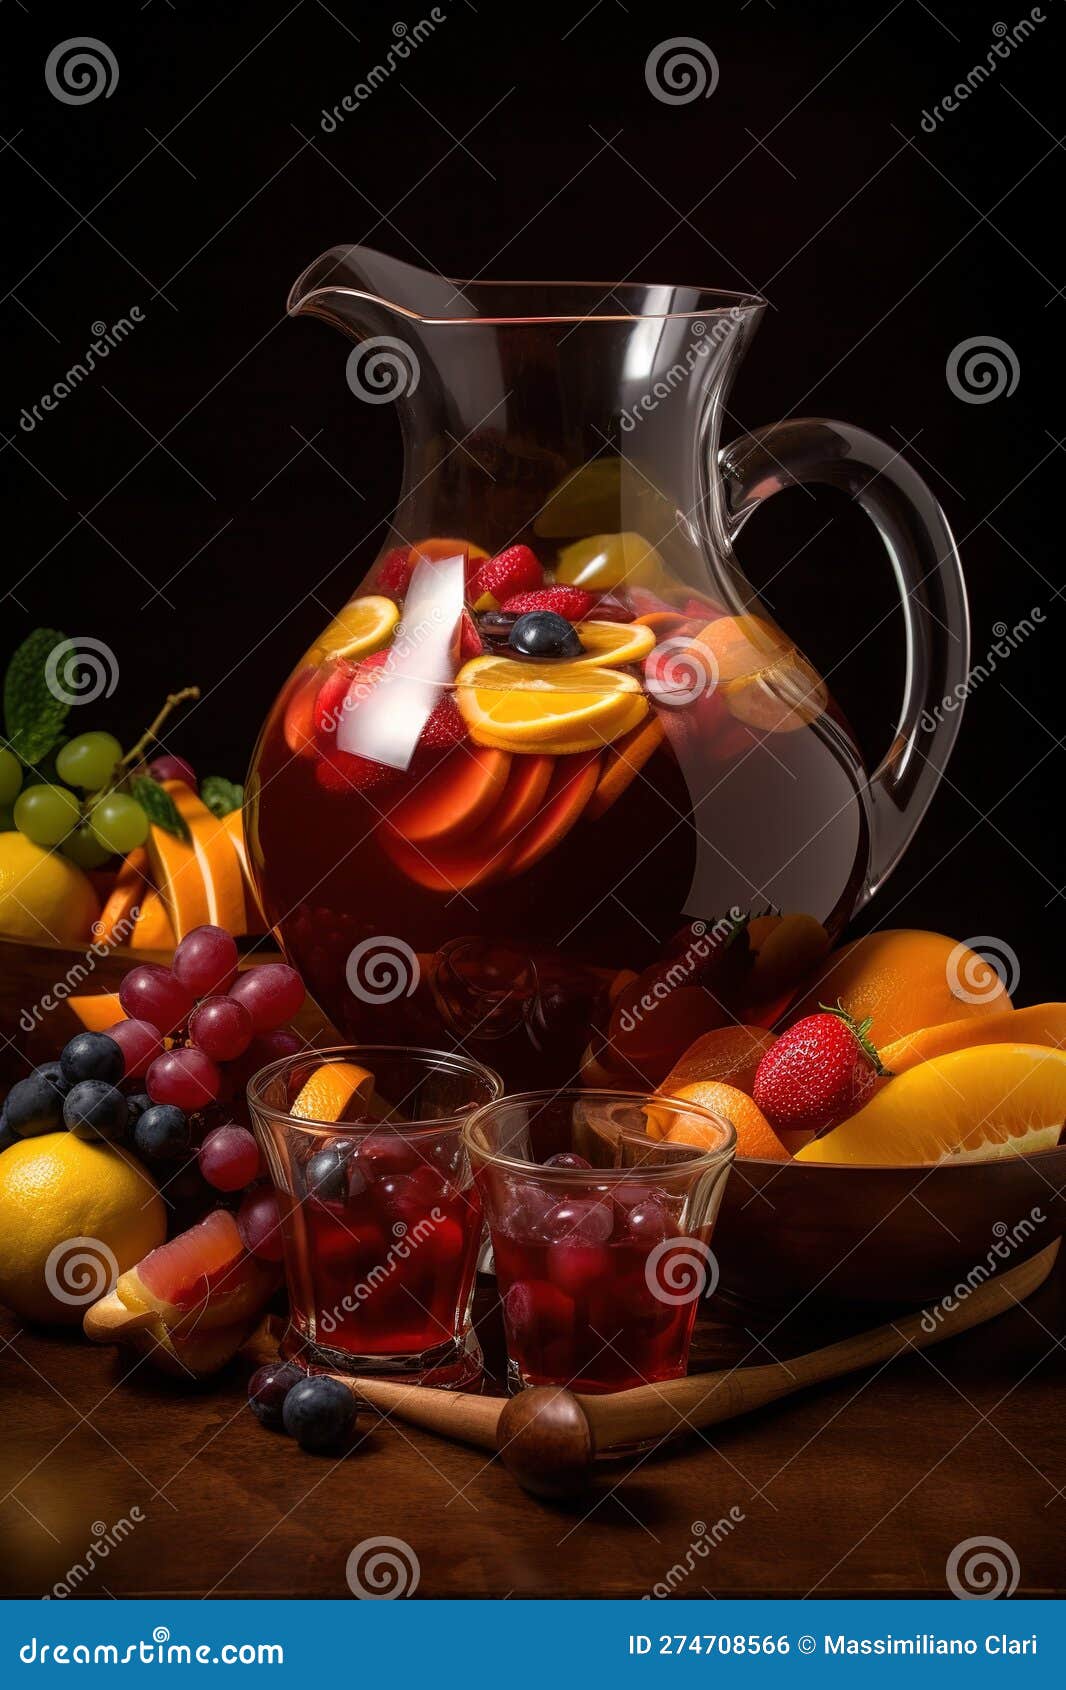 https://thumbs.dreamstime.com/z/colorful-sangria-showcasing-large-pitcher-filled-red-white-wine-fresh-fruit-splash-brandy-accompanied-glasses-274708566.jpg